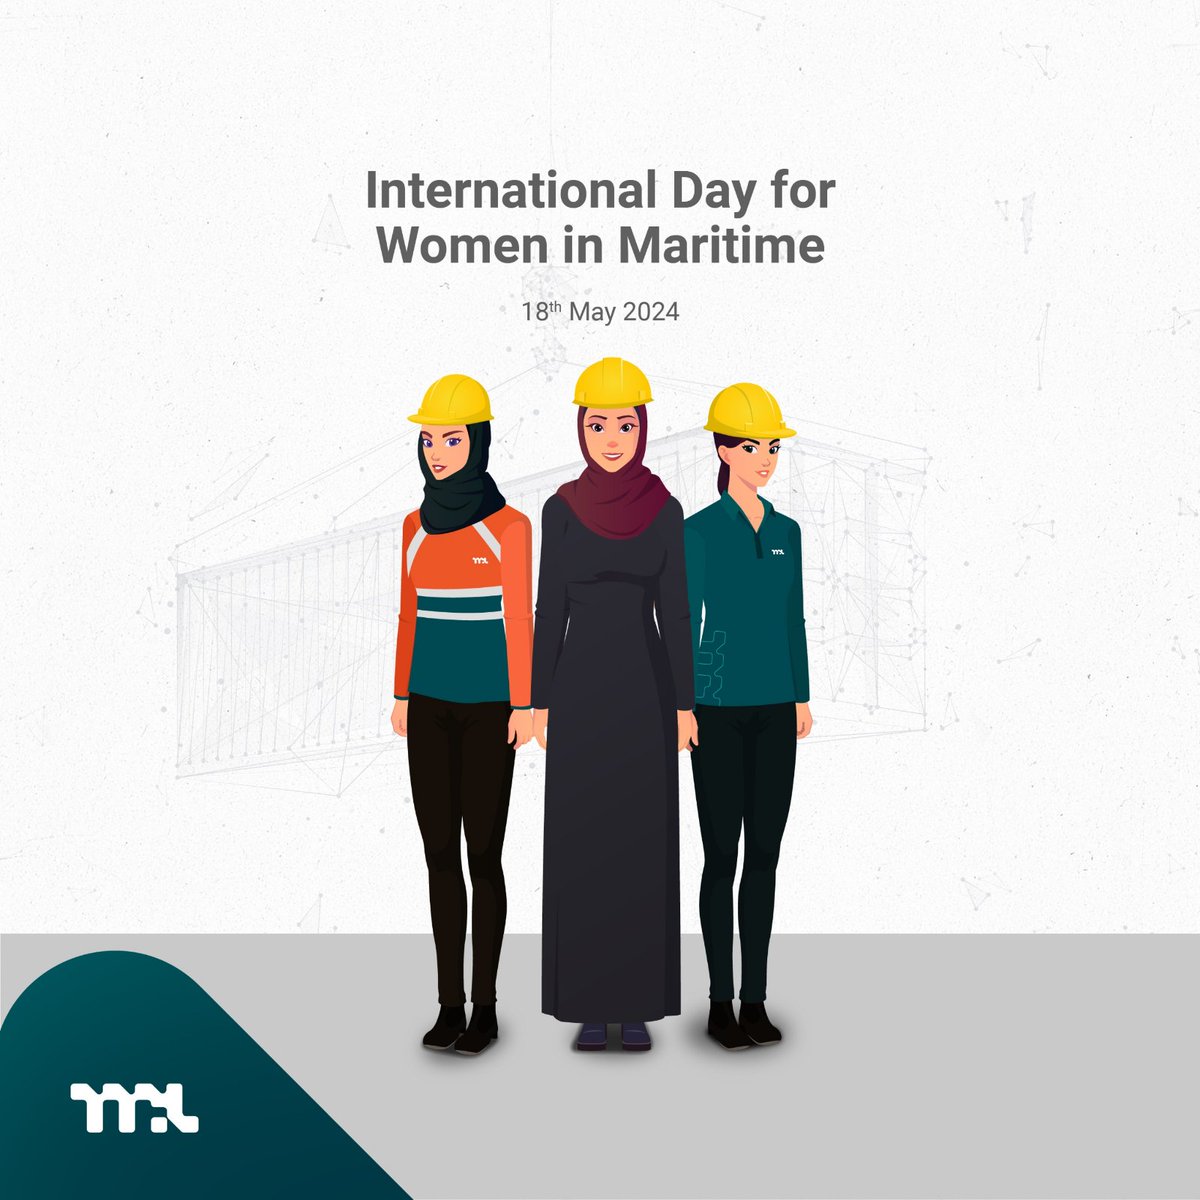 Celebrating International Day for Women in Maritime! 🌊🚢 Today, we honor and appreciate the incredible women working in the maritime industry. #WomenInMaritime #MaldivesPortsLimited #BreakingBarriers #InclusiveSeas #MaritimeExcellence #InternationalDayForWomenInMaritime